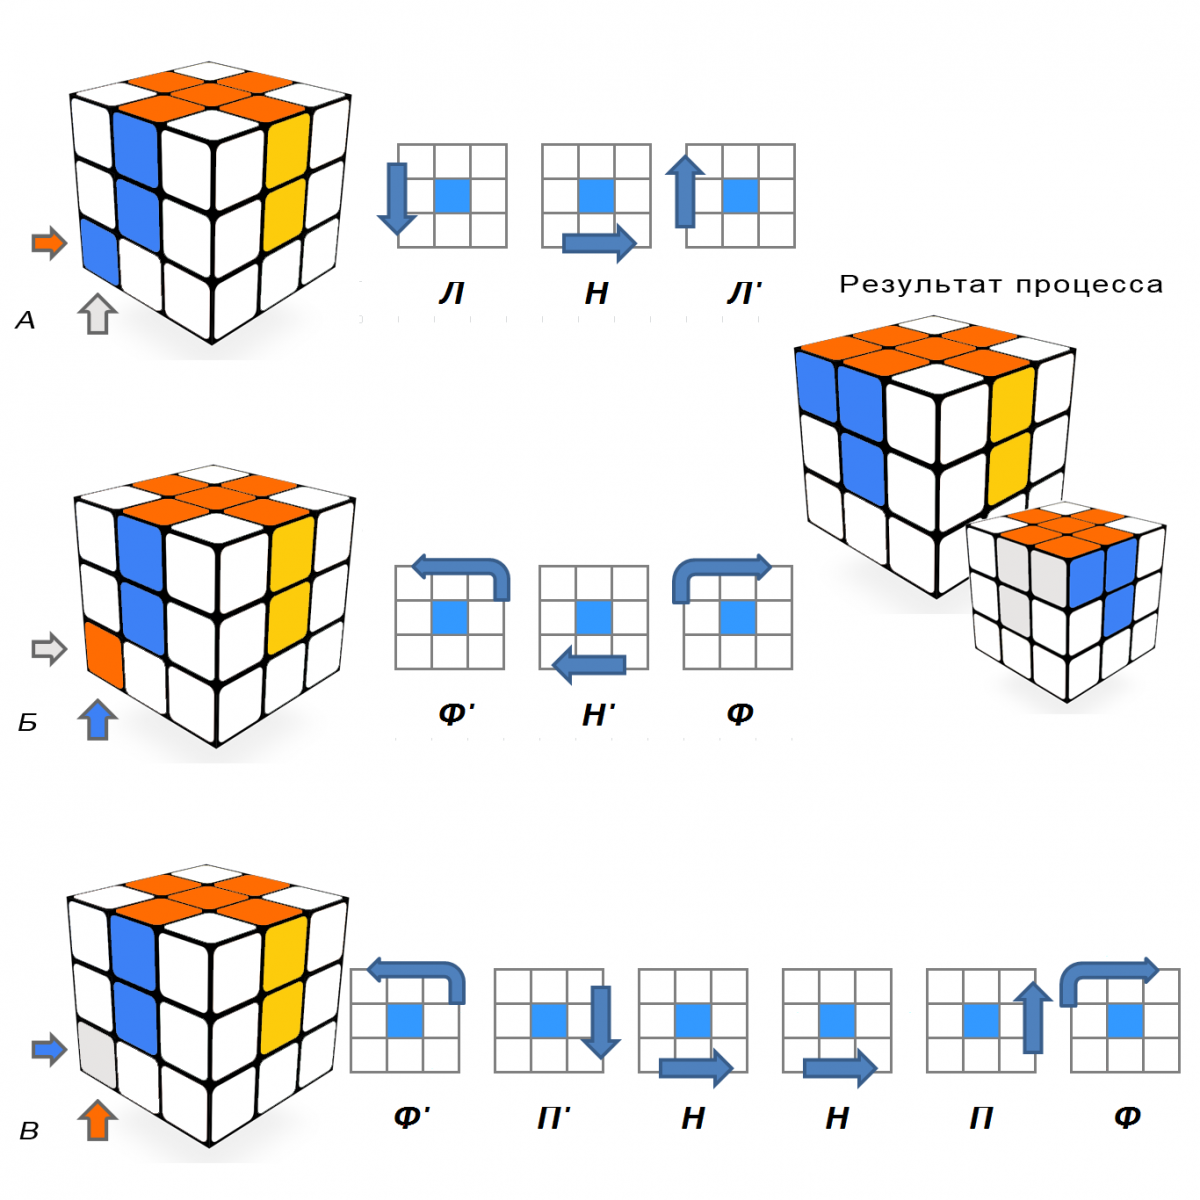 Самая простая сборка кубика. Алгоритм кубика Рубика 3х3. Схема сборки кубика Рубика 3х3. Сборка третьего слоя кубика Рубика 3х3. Как собрать кубик Рубика 3 на 3 схема.